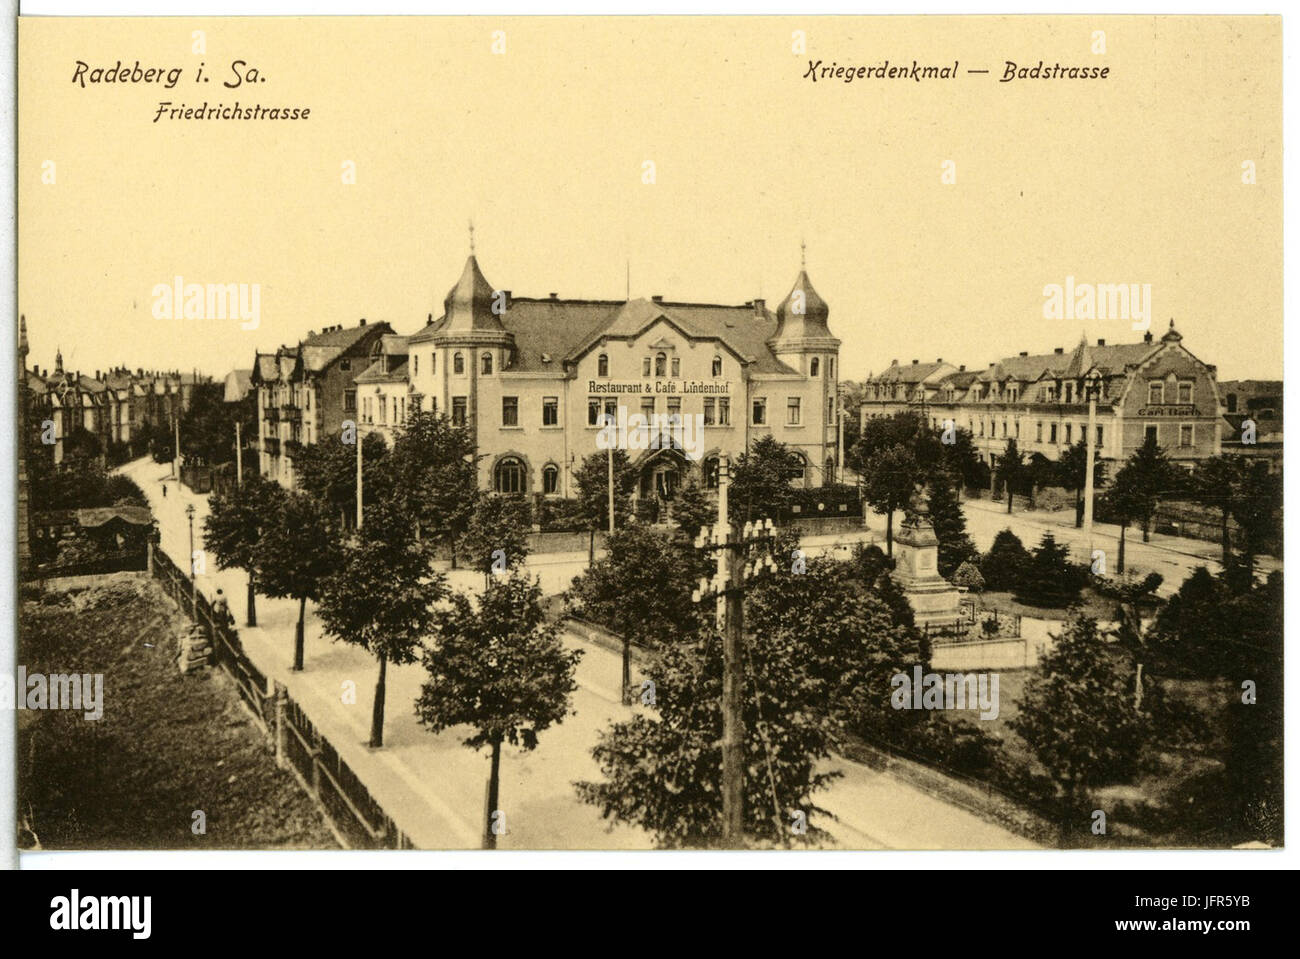 15020-Radeberg-1912-Friedrichstraße, Badstraße, Kriegerdenkmal-Brück & Sohn Kunstverlag Stock Photo